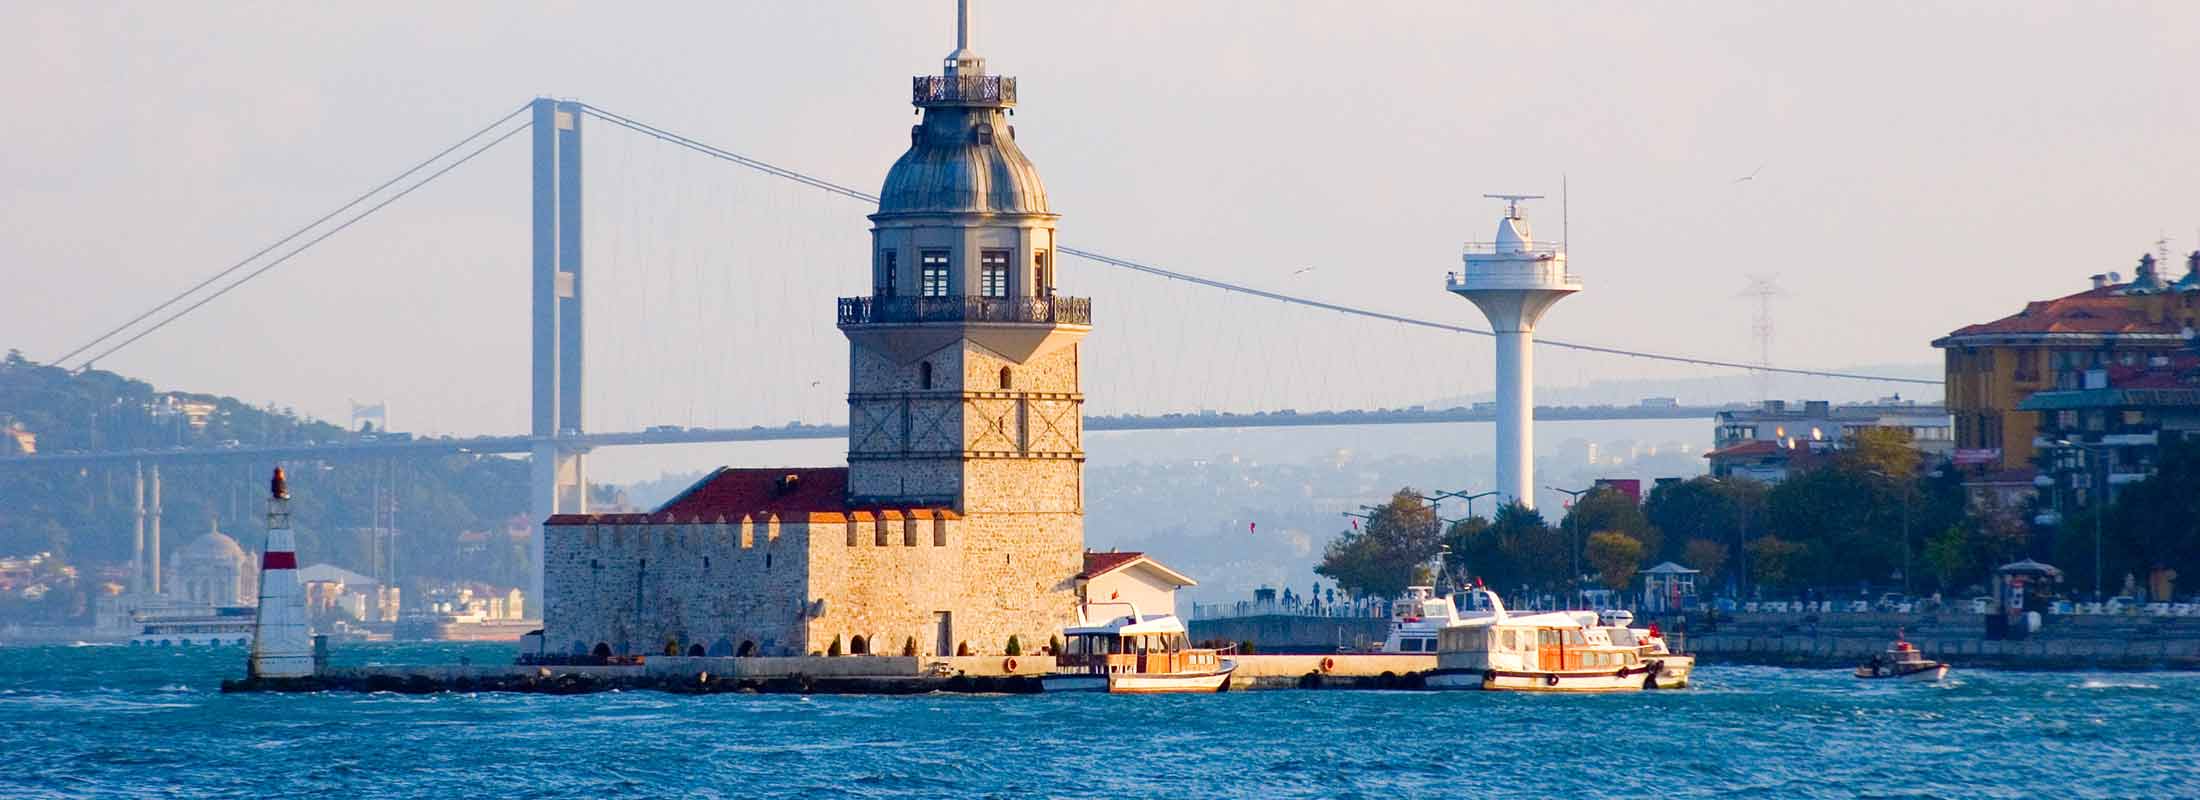 maiden-tower-Kizkulesi-uskudar-walking-tour-istanbul